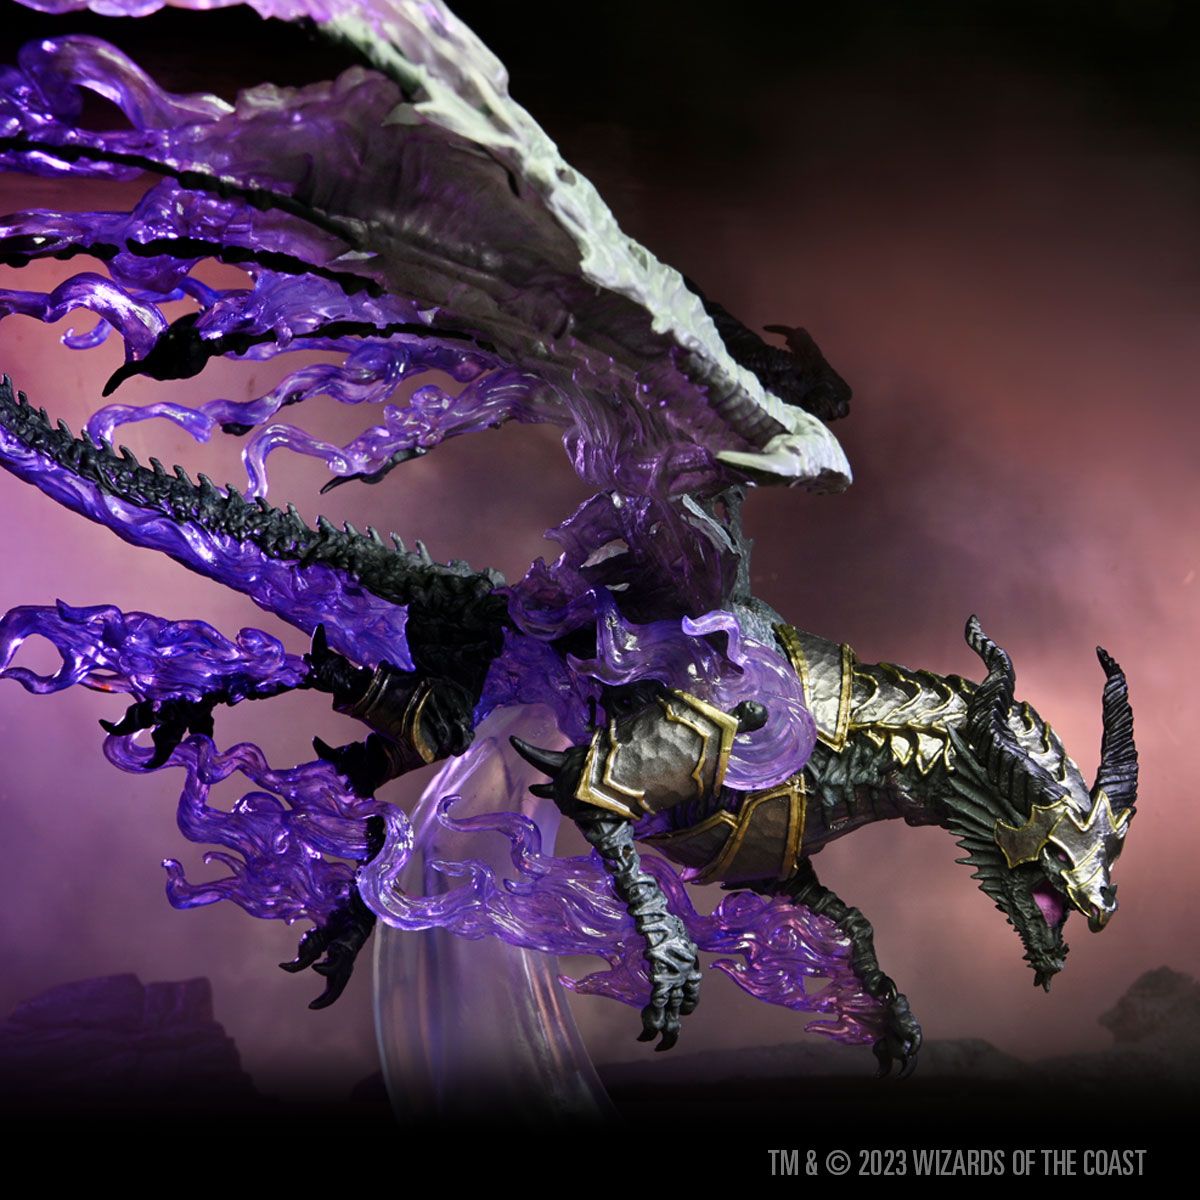 Dragonlance: Shadow of the Dragon Queen Steel Edition (D&D) – Beadle &  Grimm's Pandemonium Warehouse